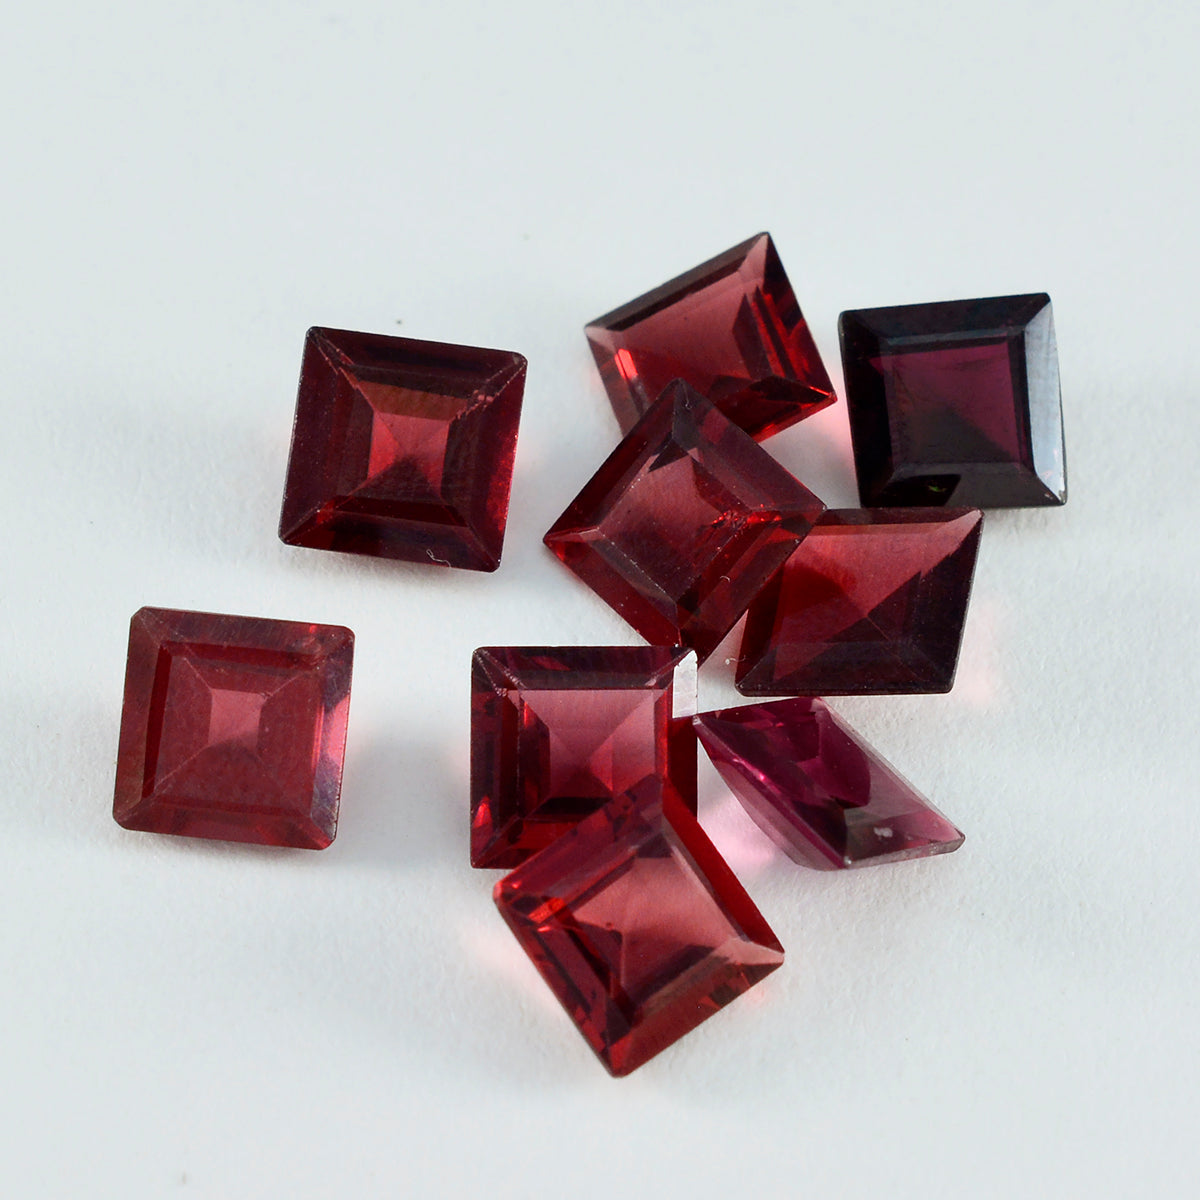 Riyogems 1 Stück echter roter Granat, facettiert, 9 x 9 mm, quadratische Form, hübscher, hochwertiger, loser Edelstein